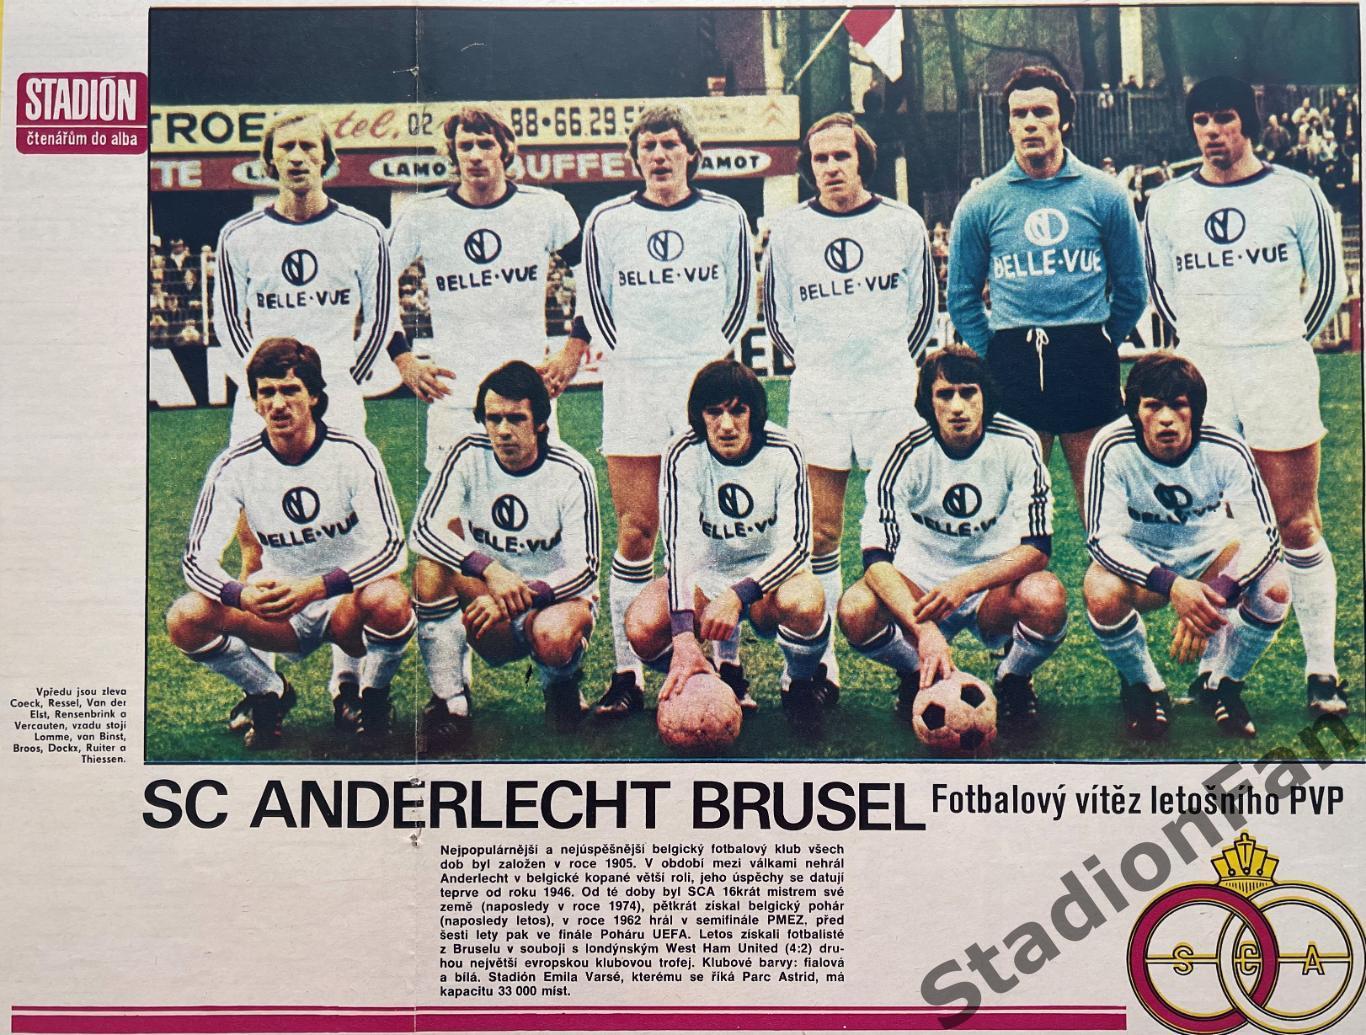 Постер из журнала Стадион (Stadion) - Anderlecht Brusel, 1976.